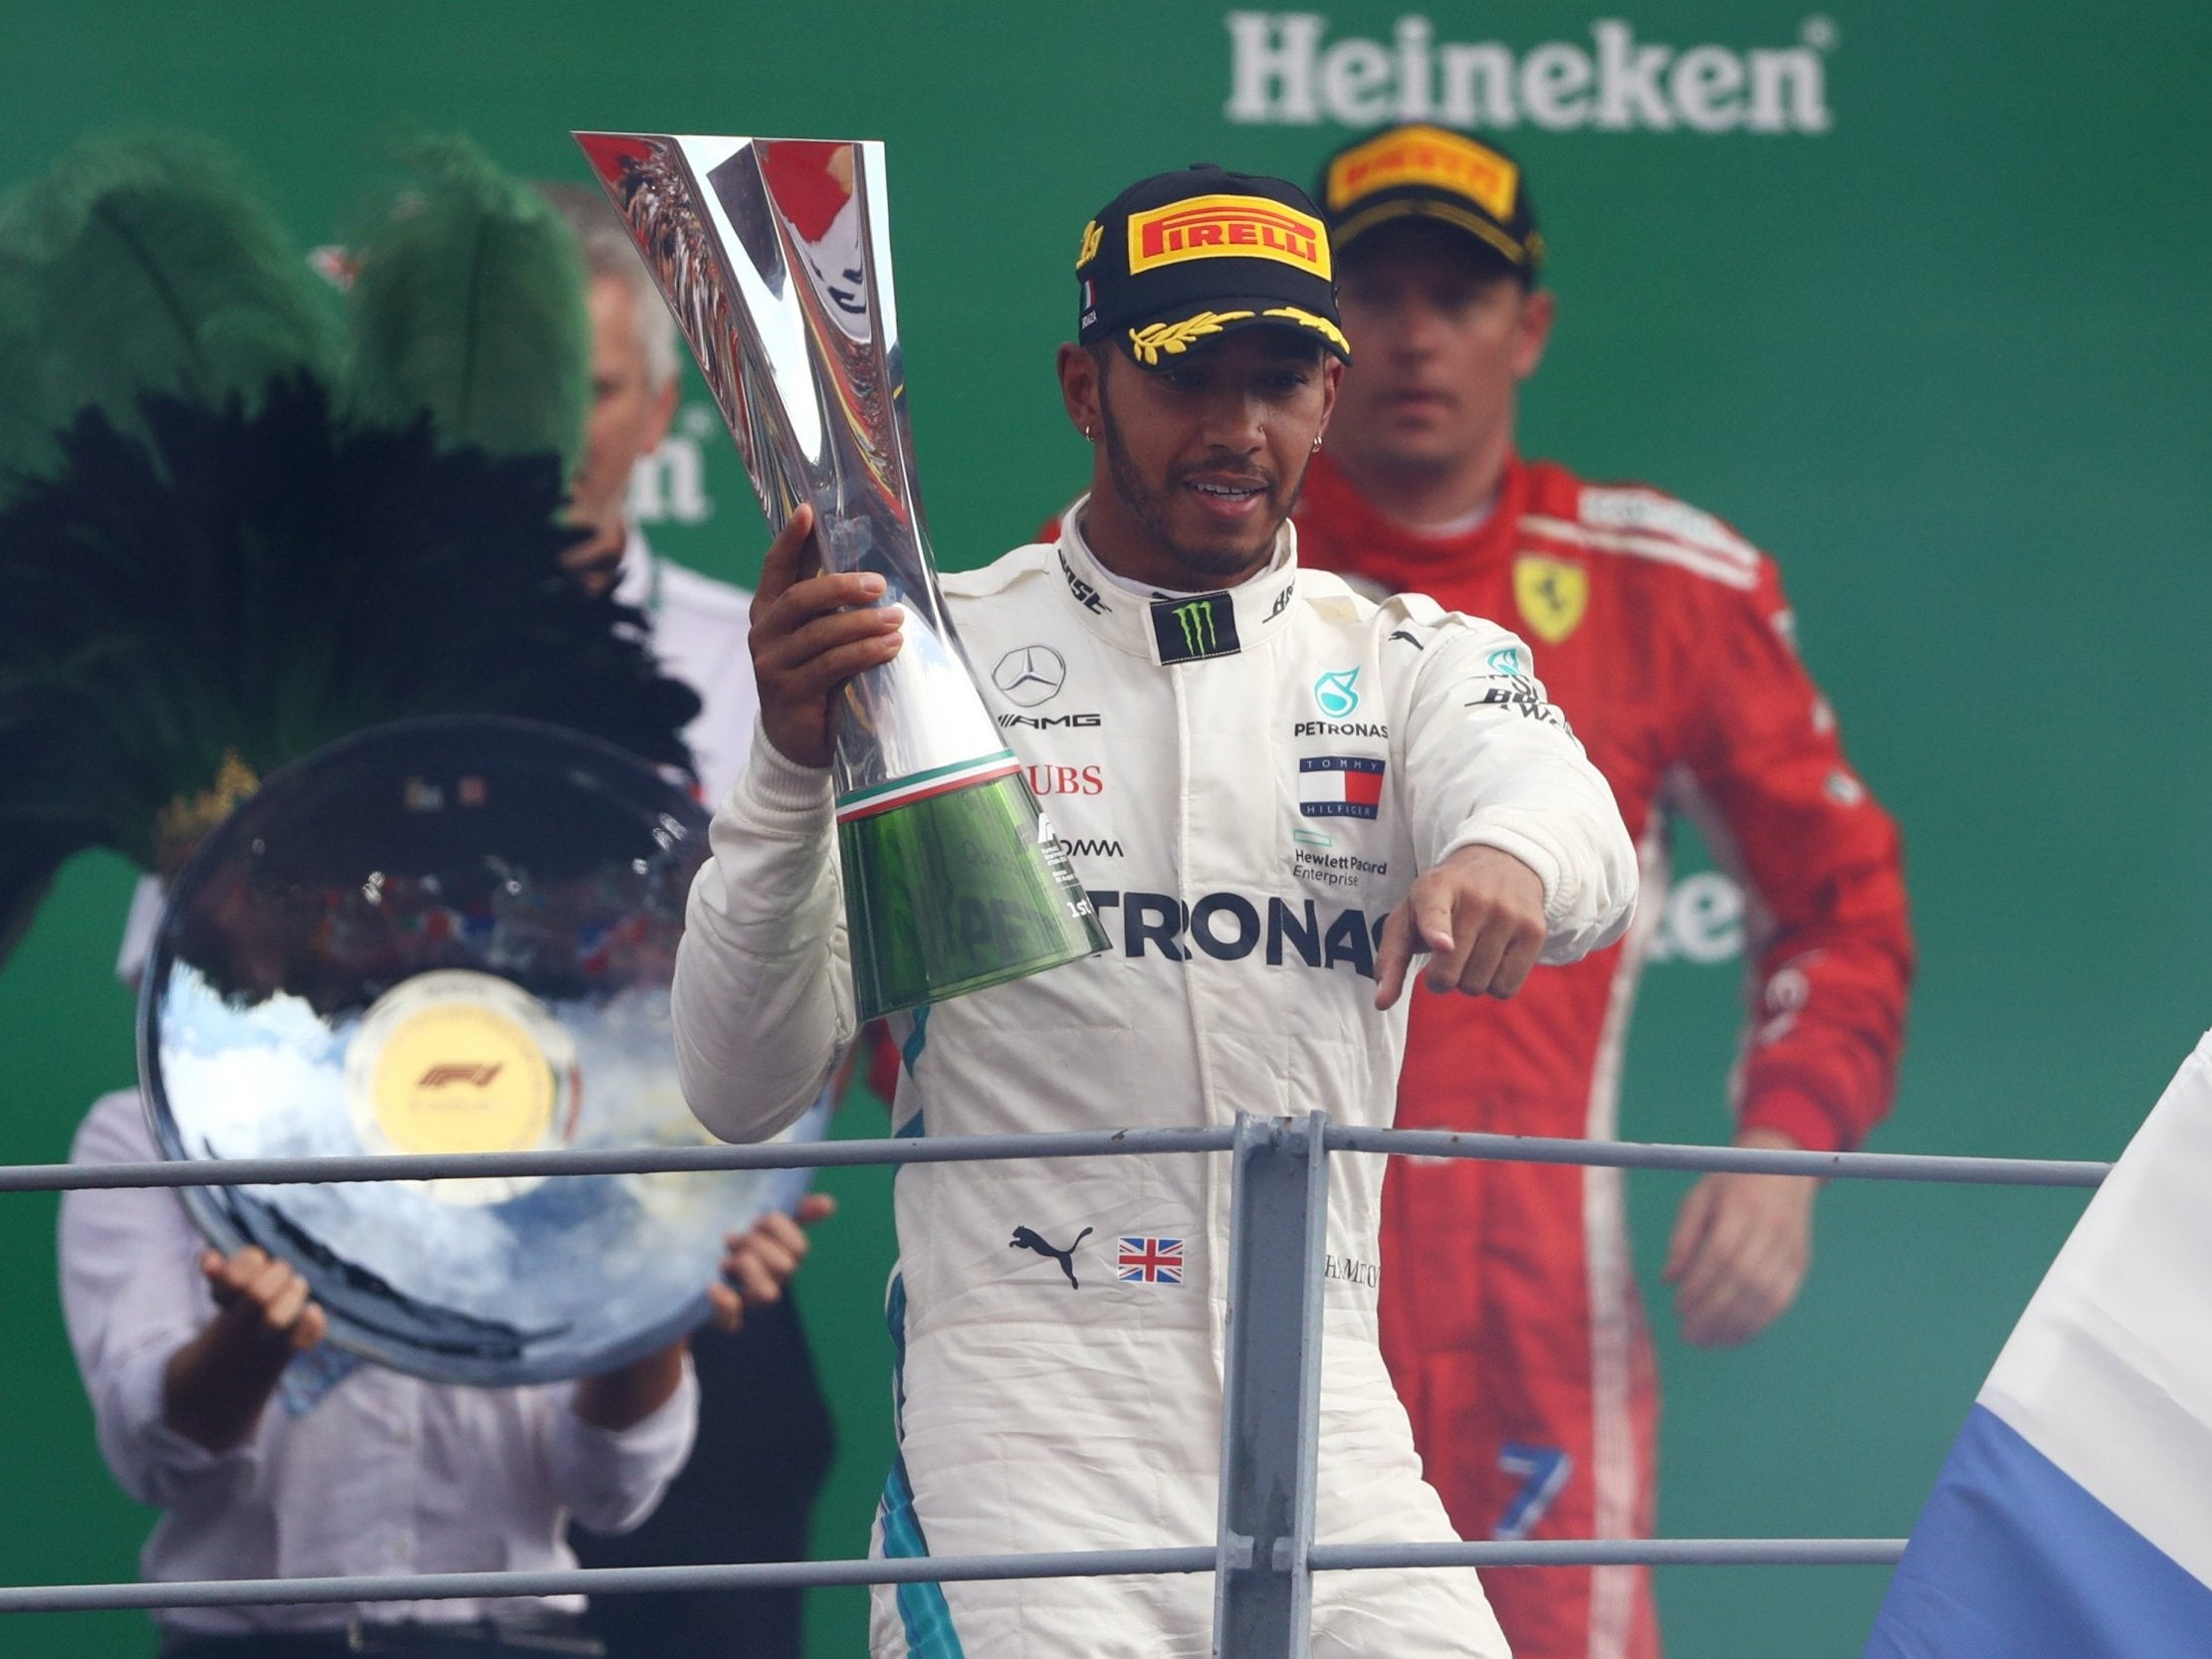 Lewis Hamilton equalled Michael Schumacher's record of five Italian Grand Prix wins